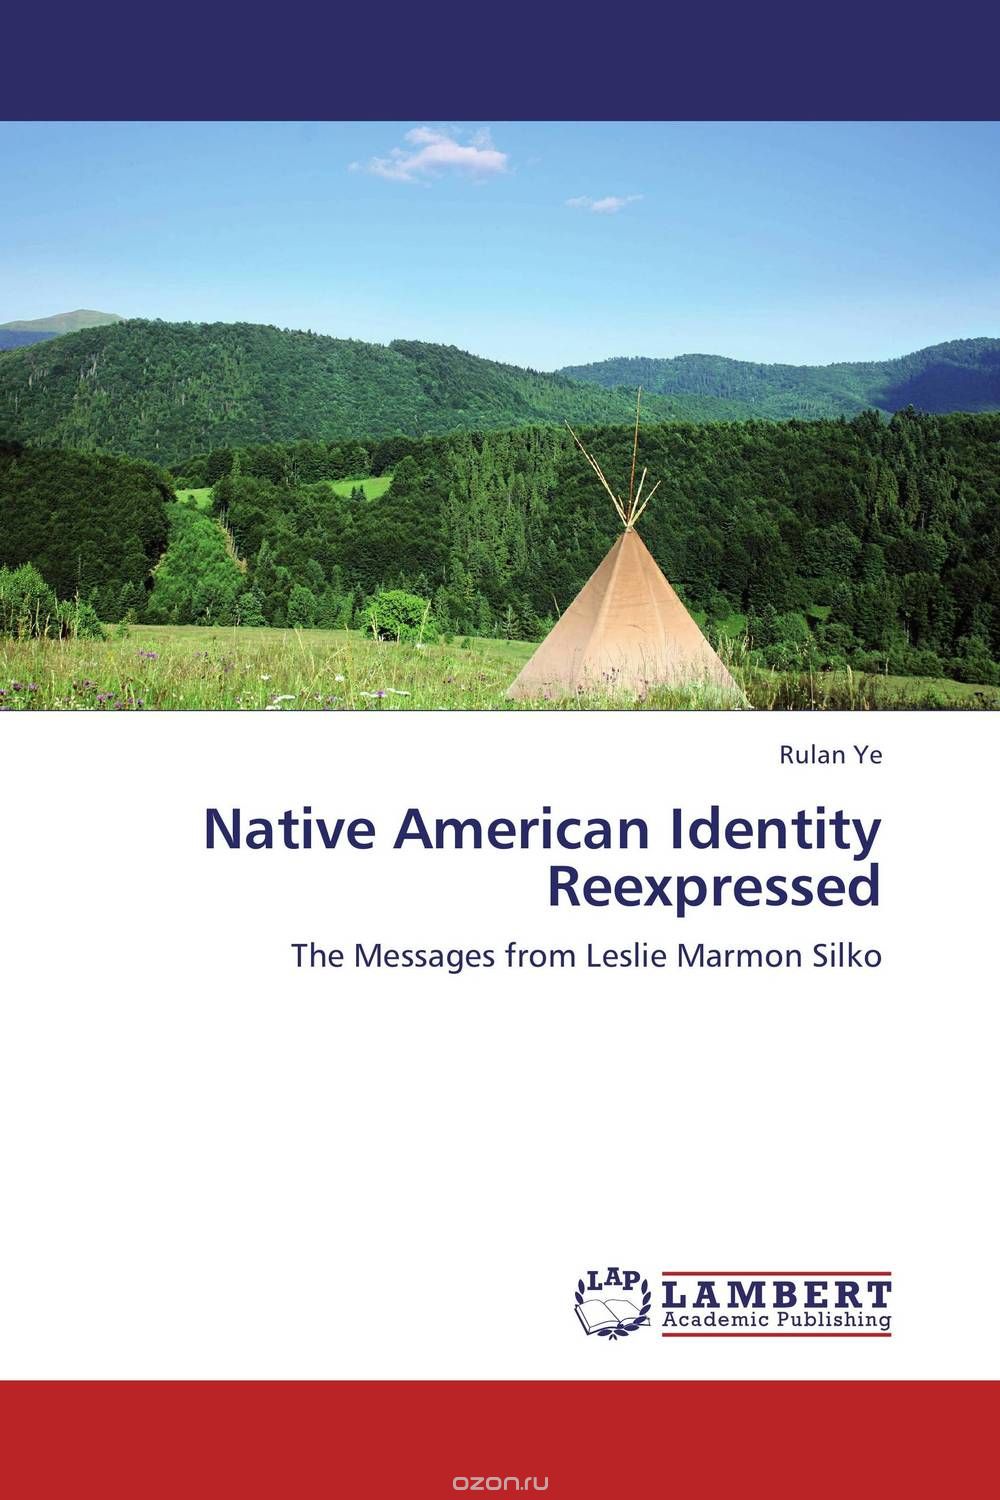 Скачать книгу "Native American Identity Reexpressed"